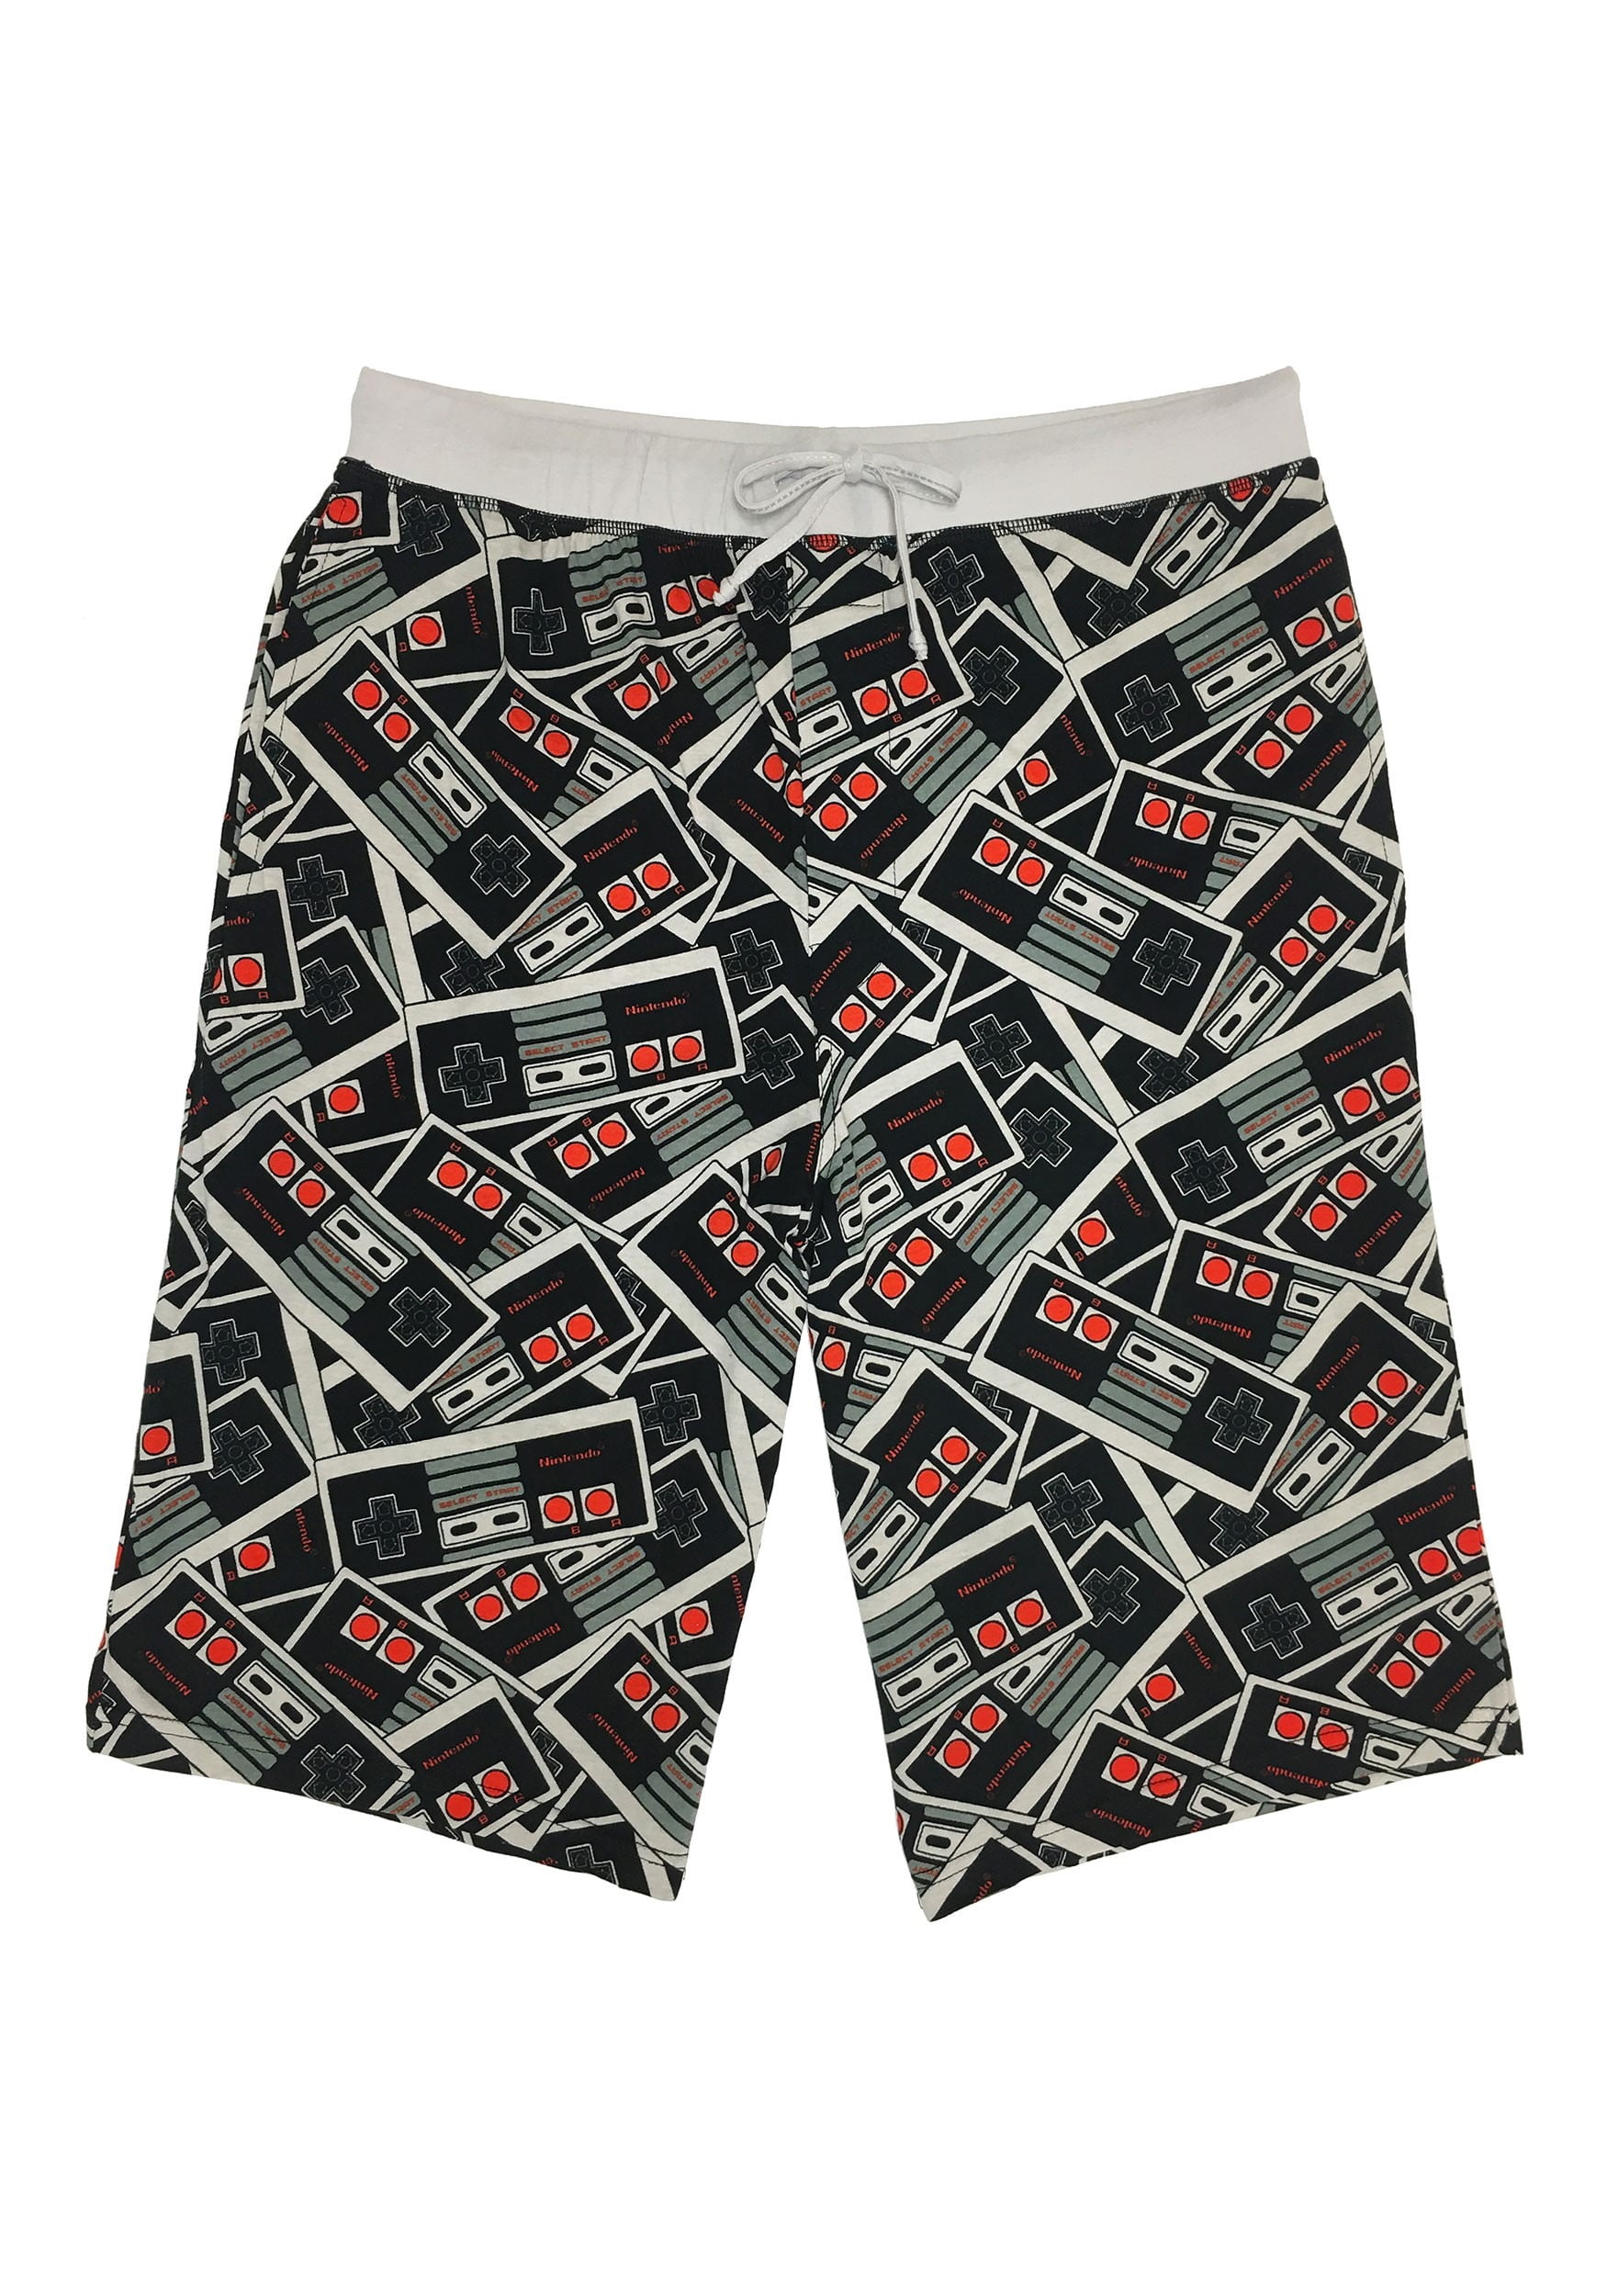 Men's NES Controller Gray Drawstring Sleep Shorts - Walmart.com